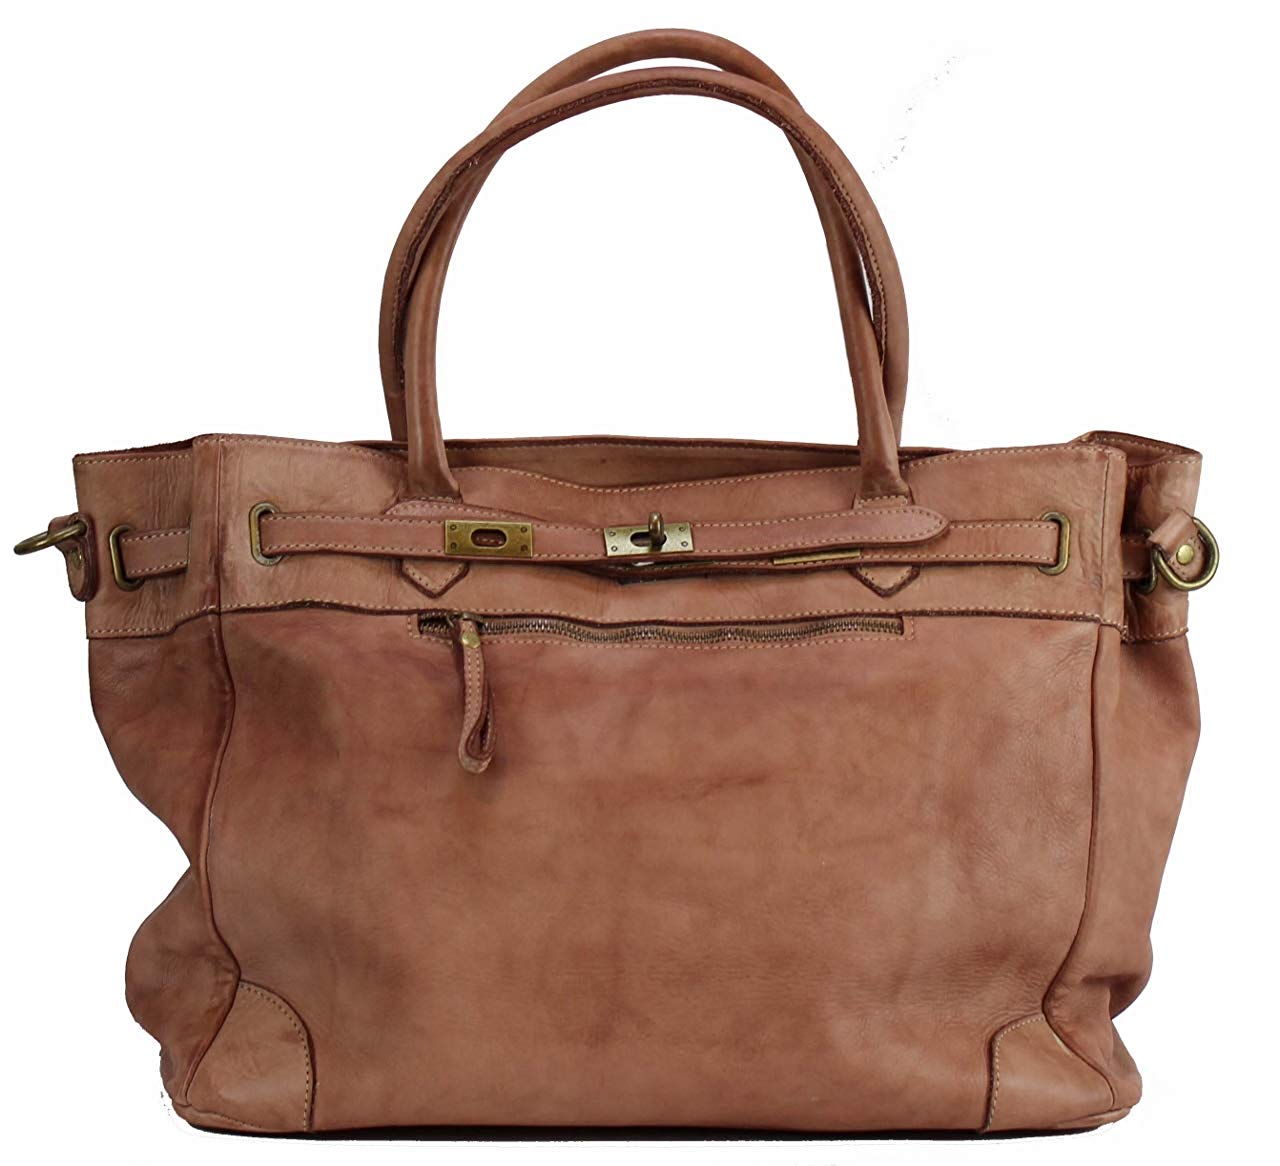 BZNA Bag Mila Rosa rose vintage Italy Designer Business Damen Handtasche Ledertasche Schultertasche Tasche Leder Shopper Neu